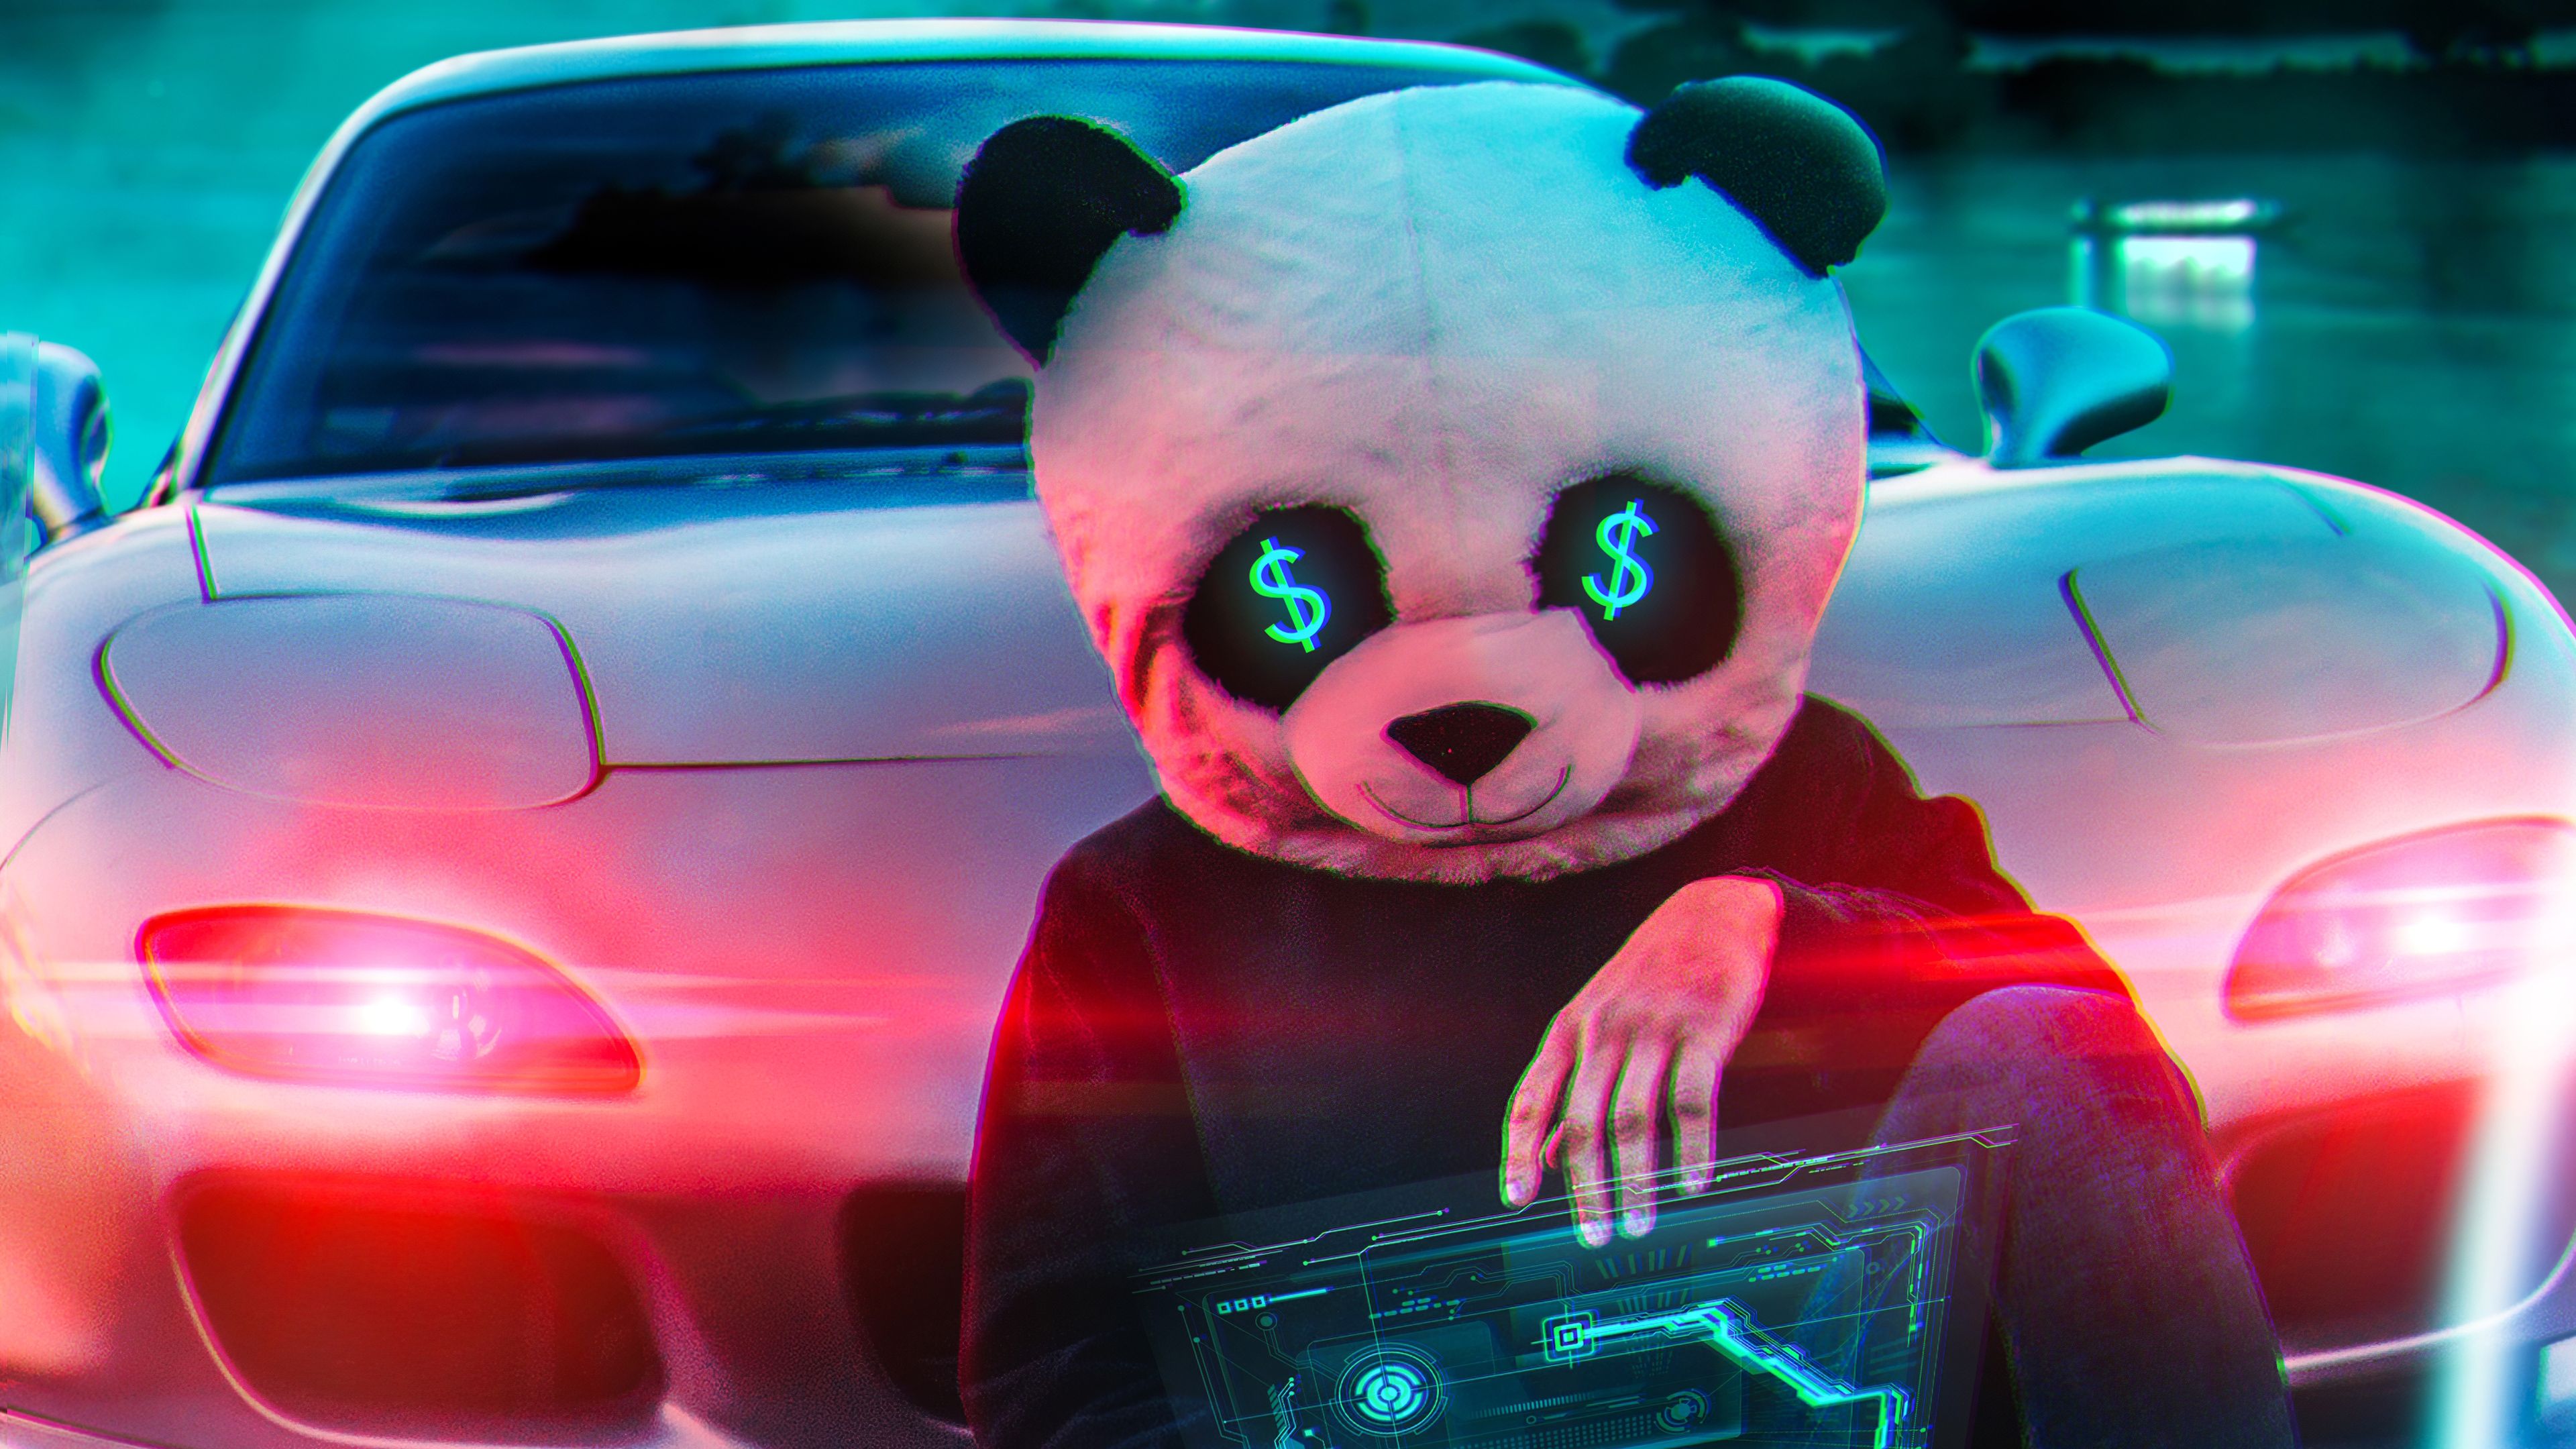 Panda Money Guy 4k, HD Artist, 4k Wallpaper, Image, Background